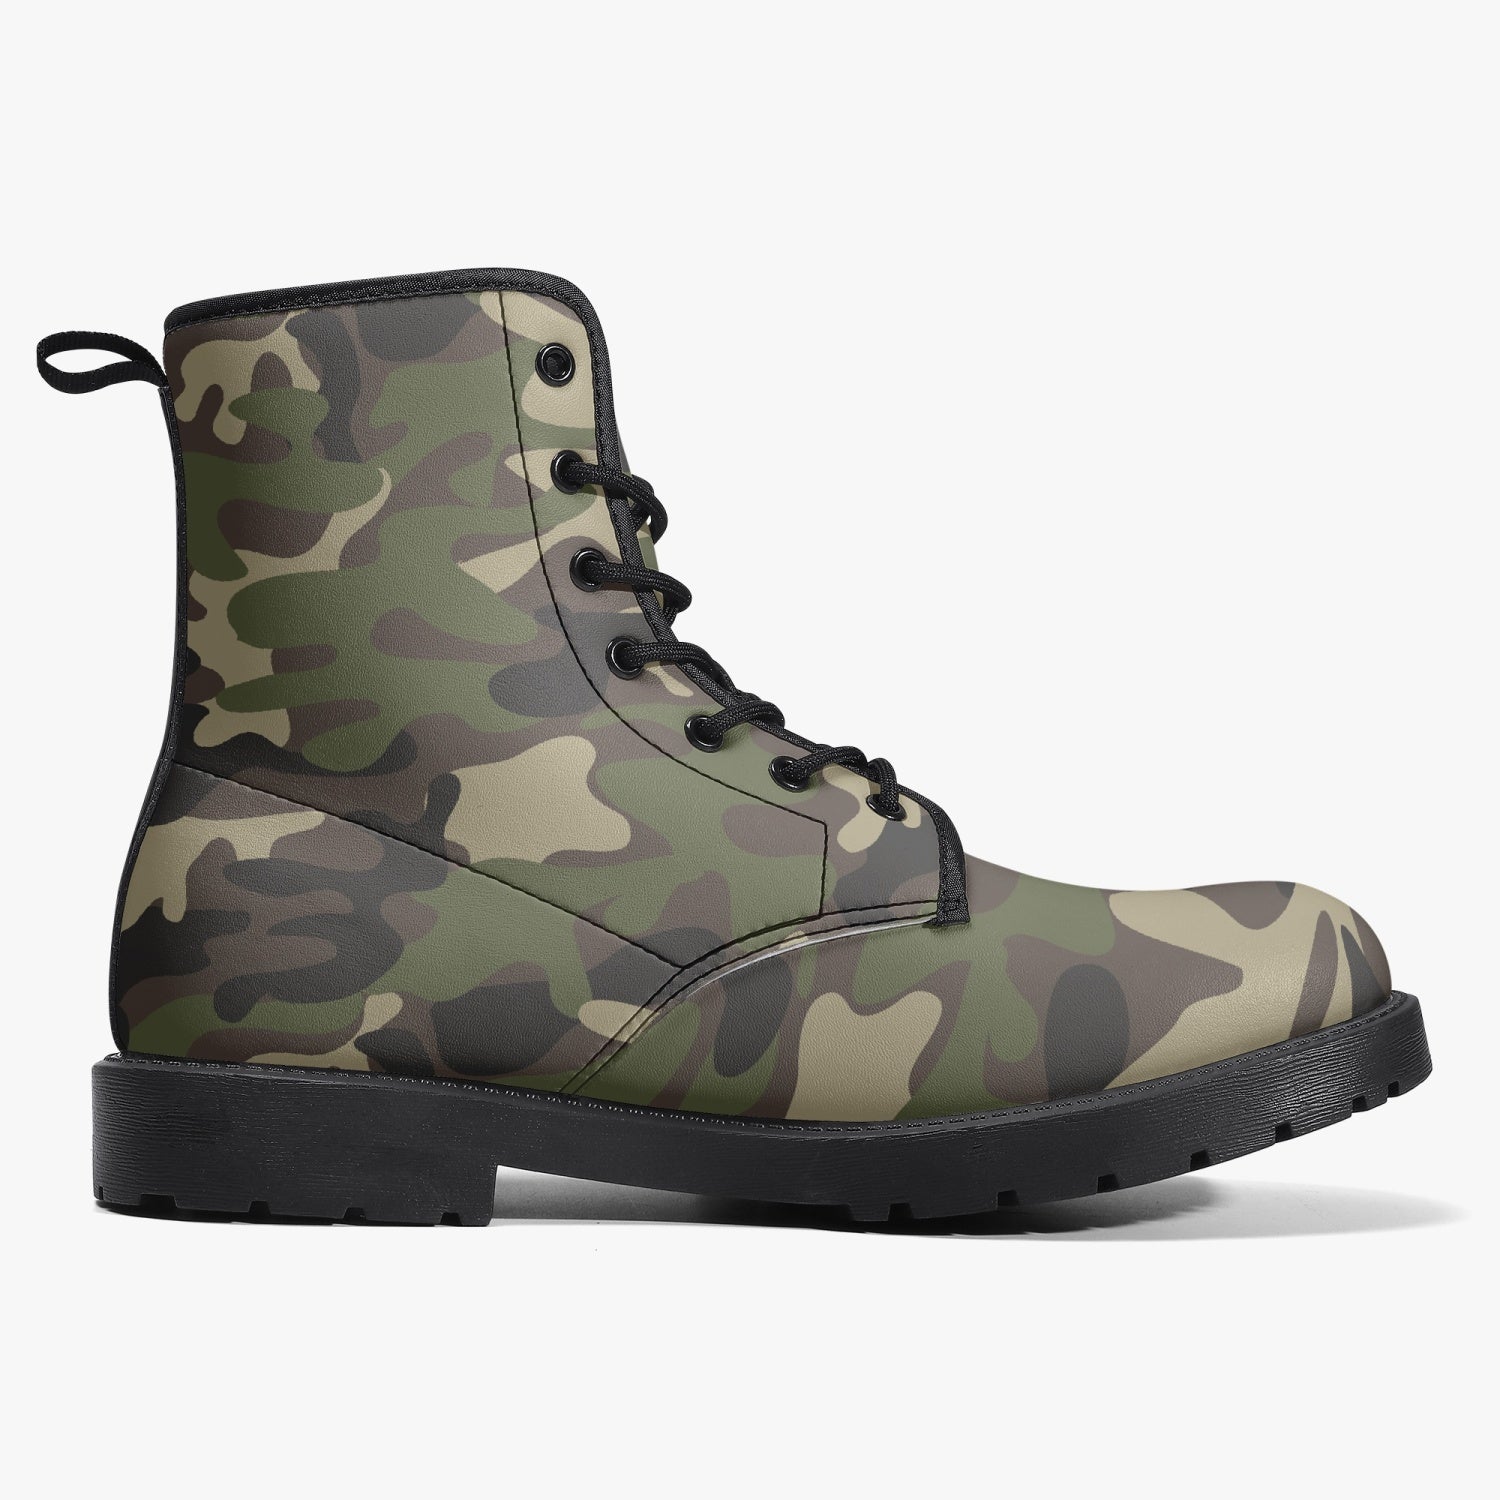 Custom Combat Boots